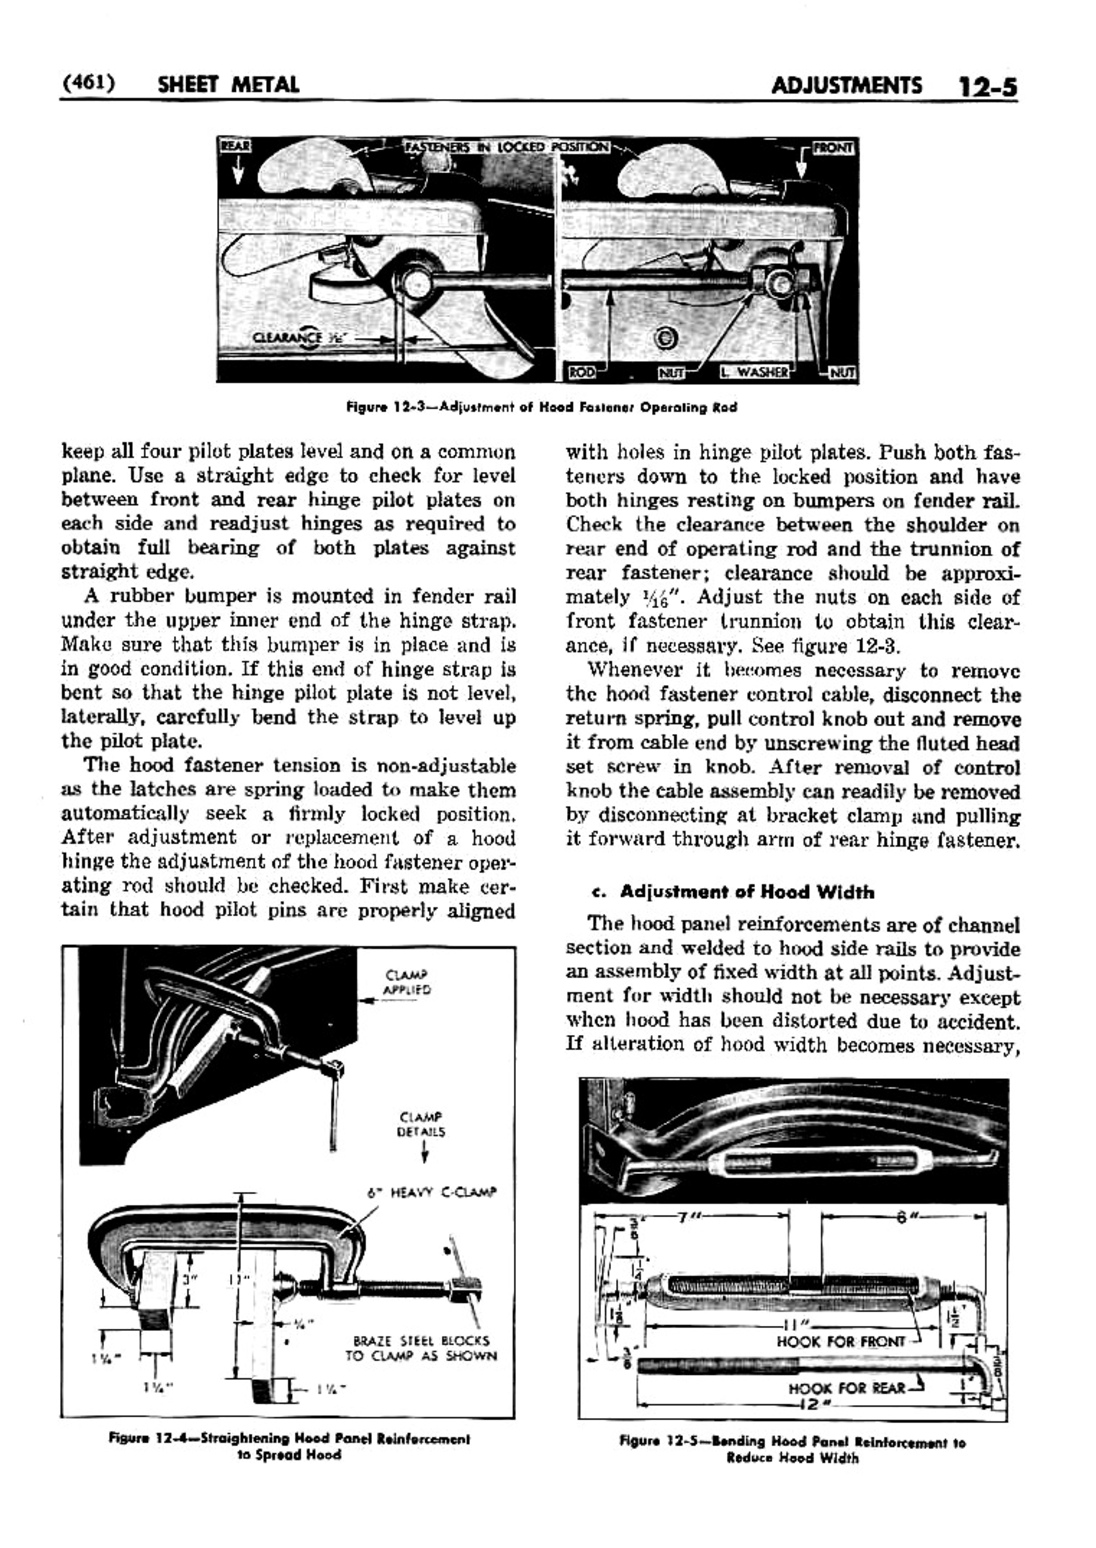 n_13 1952 Buick Shop Manual - Sheet Metal-005-005.jpg